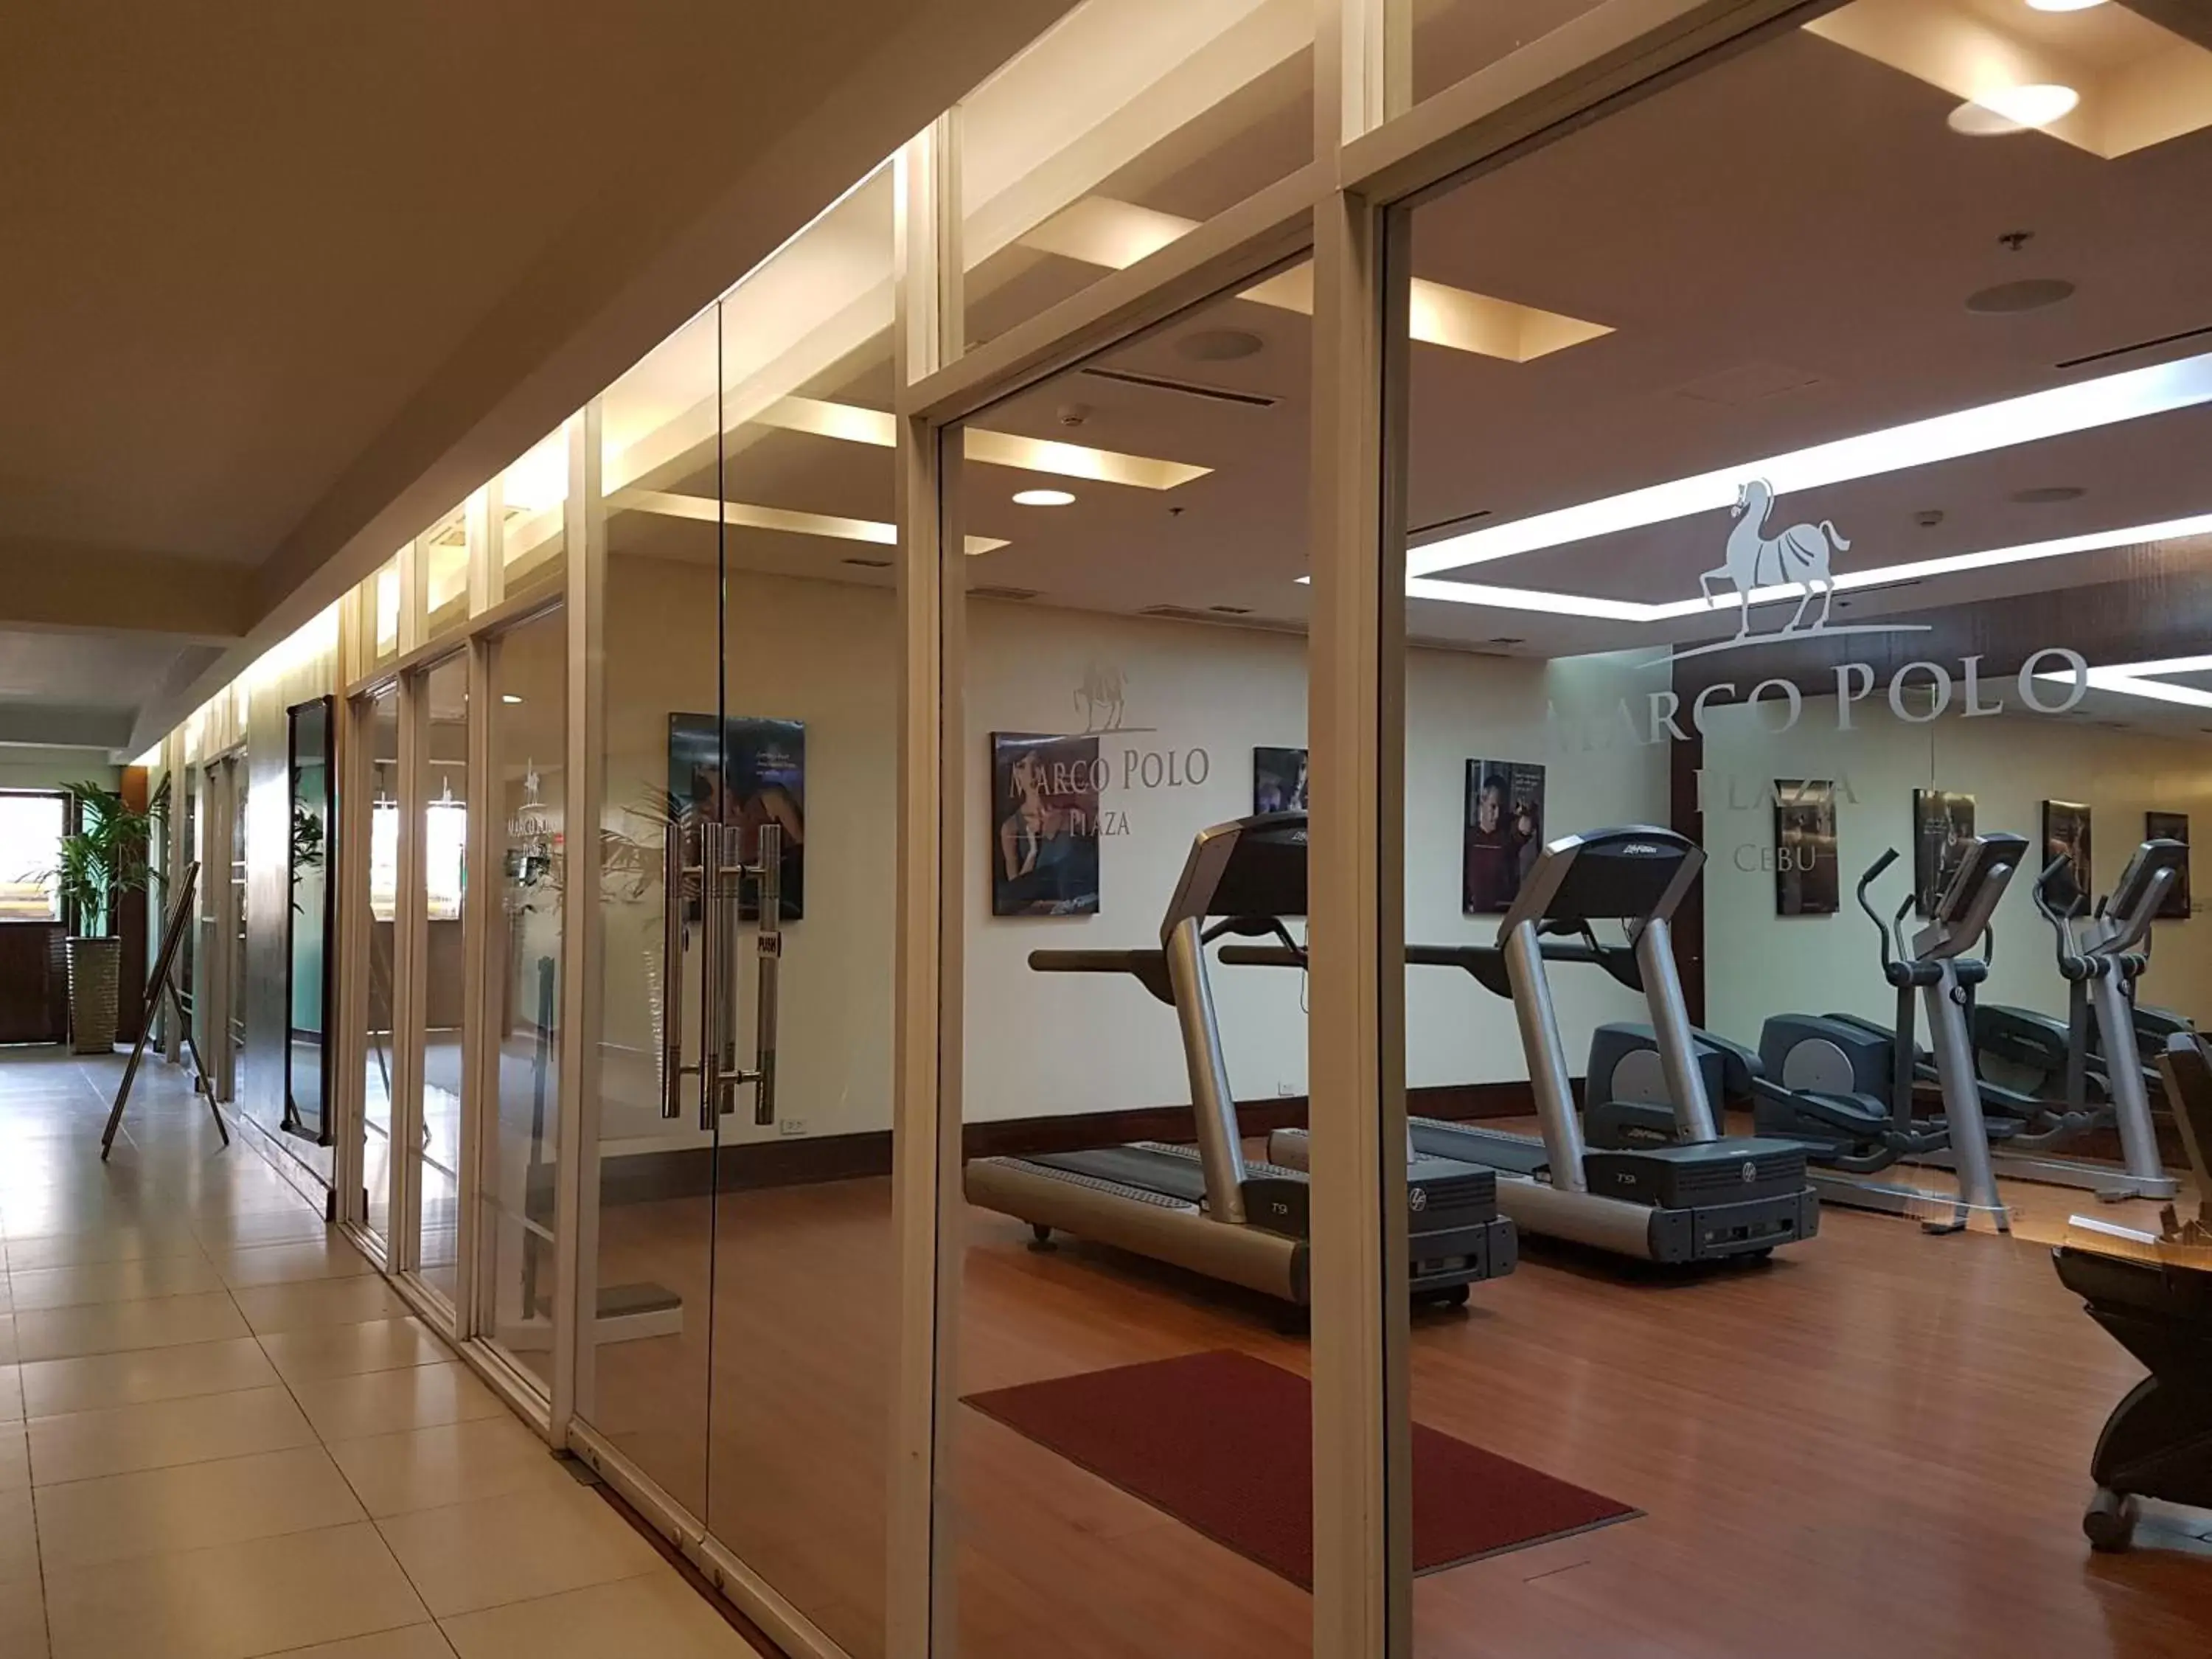 Fitness centre/facilities, Fitness Center/Facilities in Marco Polo Plaza Cebu